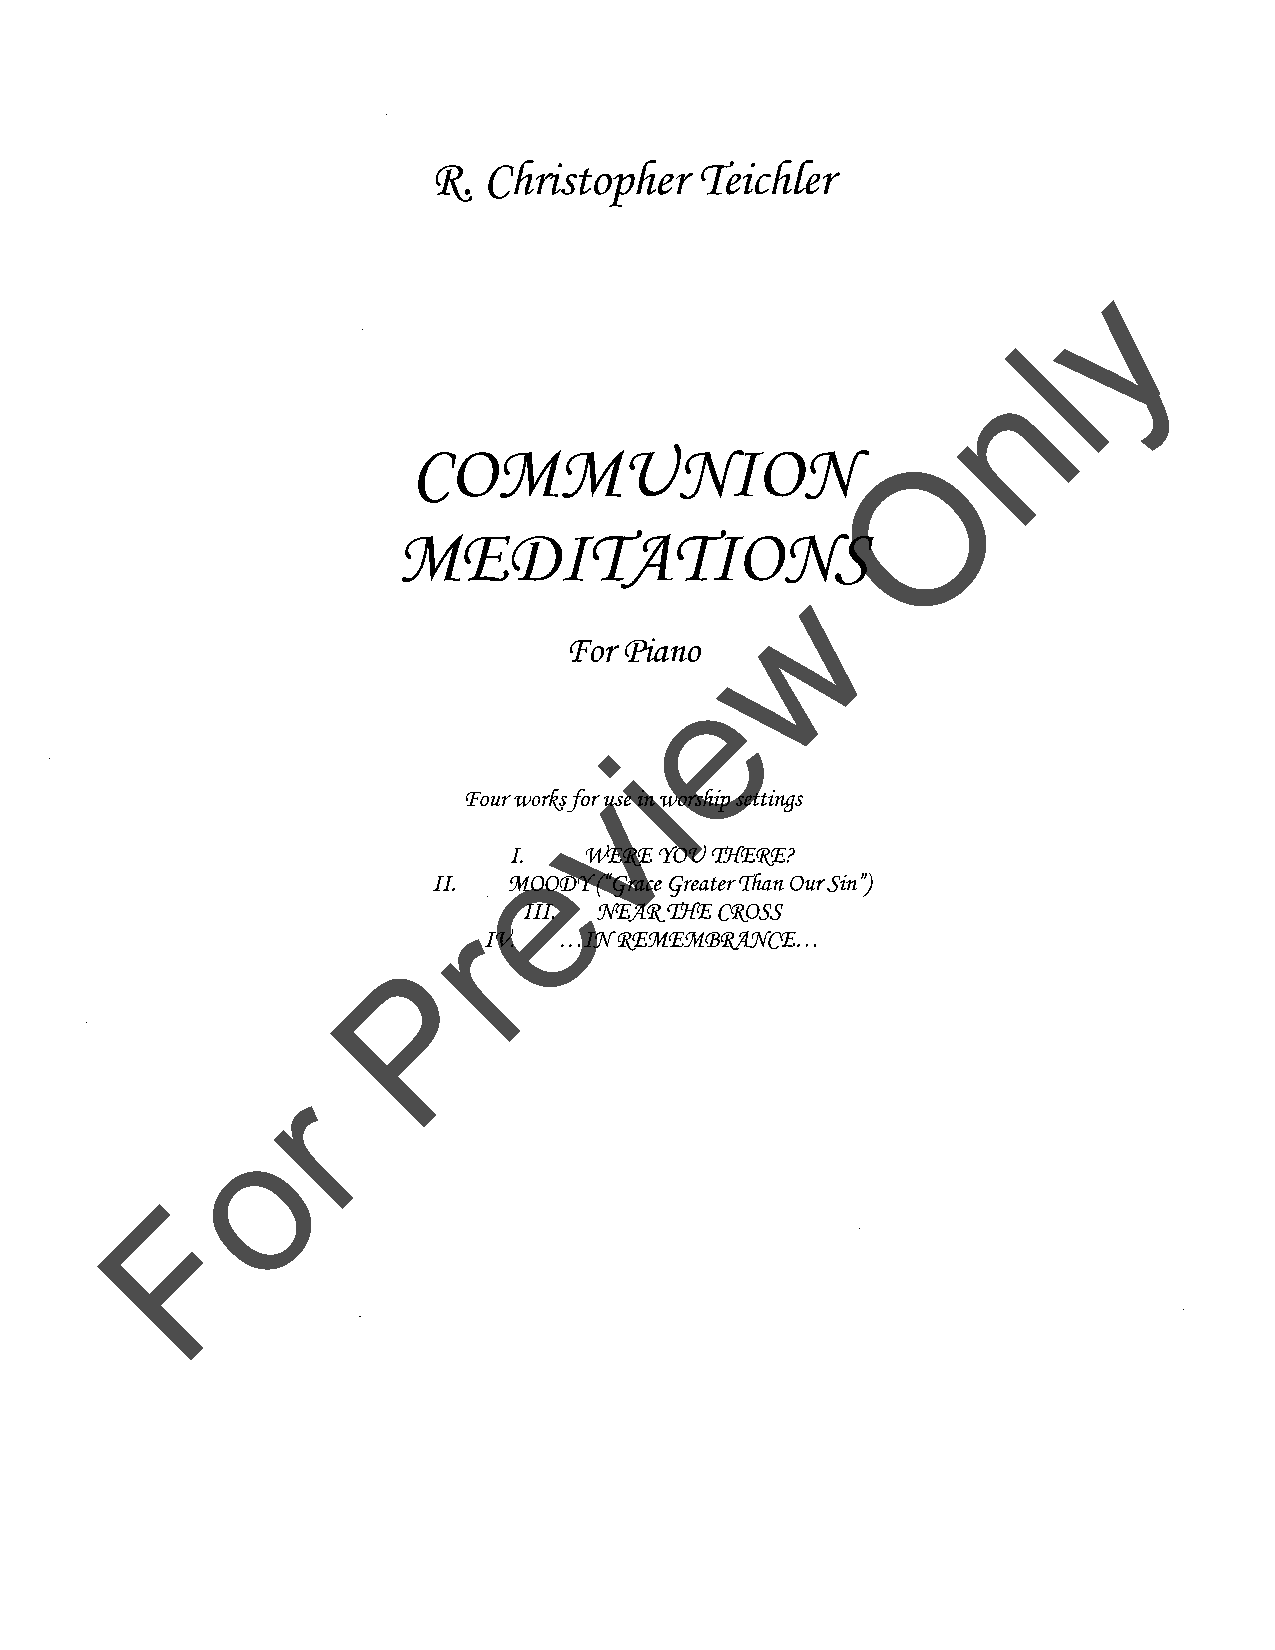 Communion Meditations by R. Christopher Teichler J.W. Pepper Sheet Music